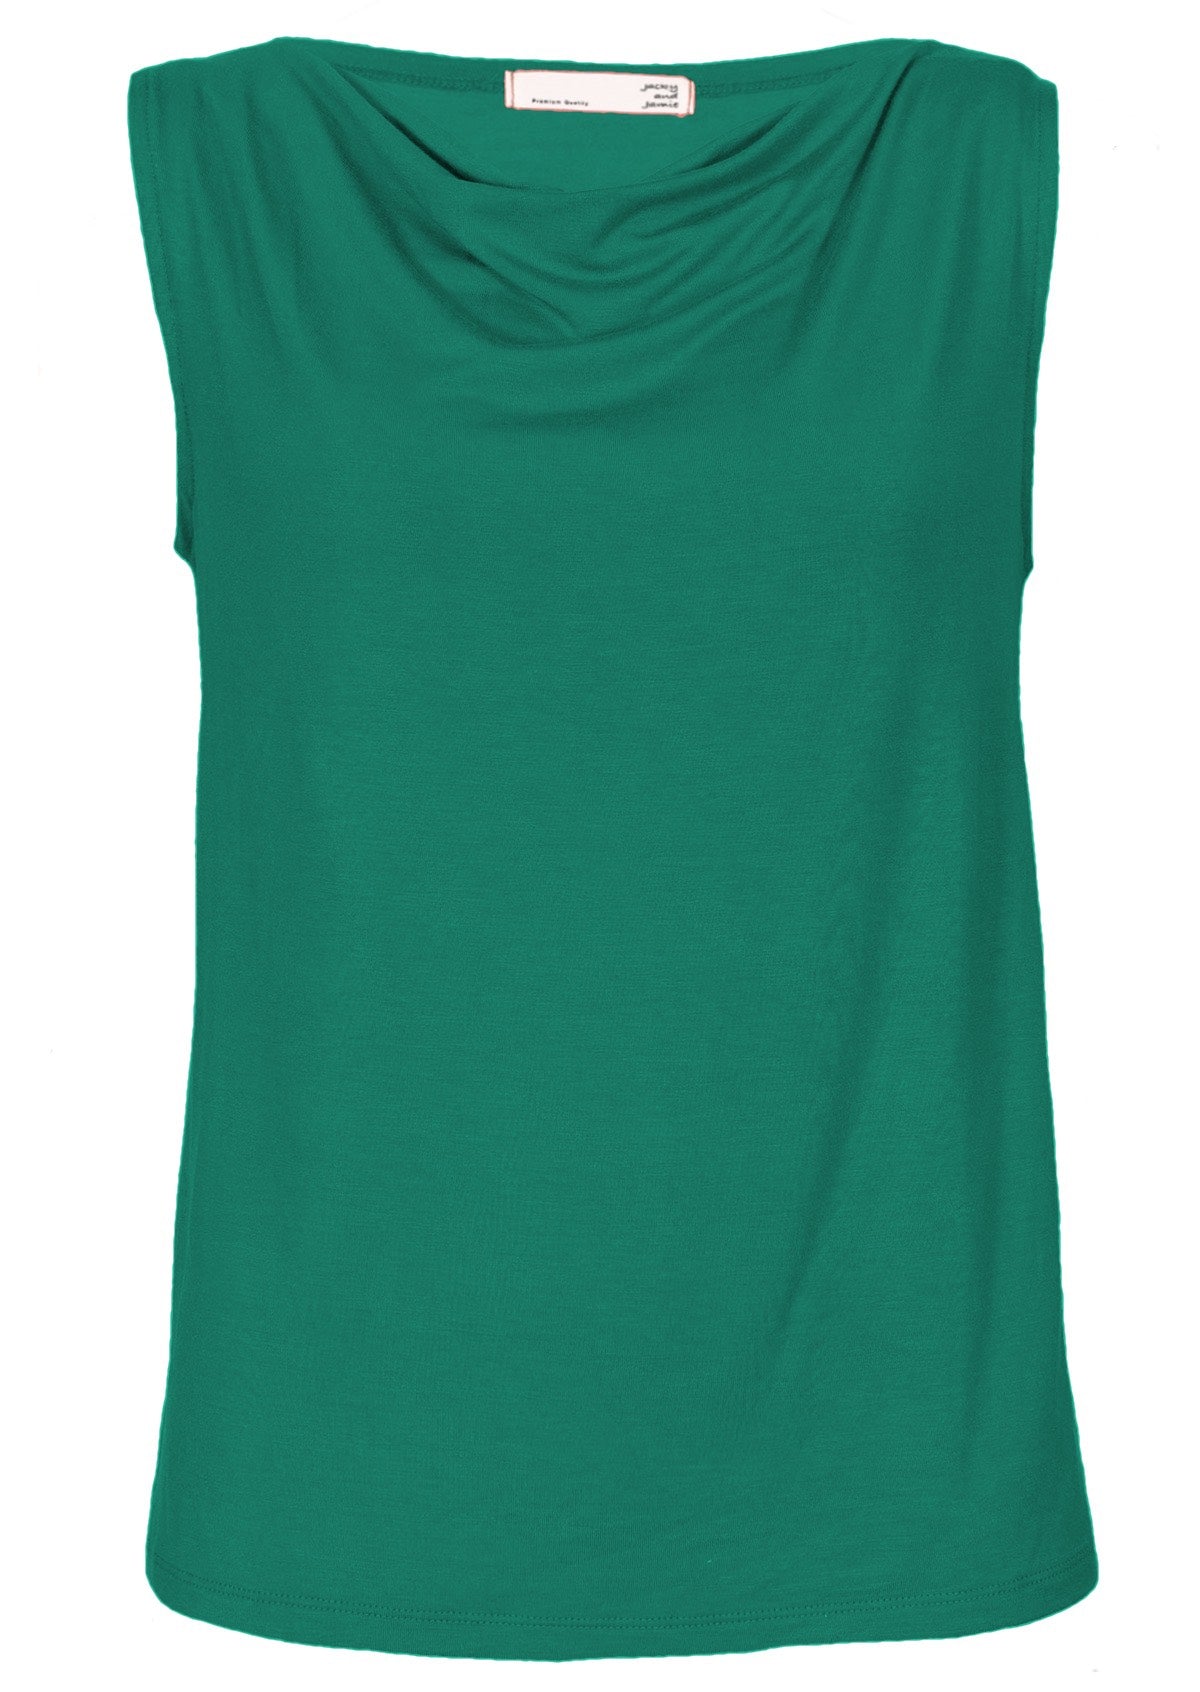 Women's basic short sleeve top green front